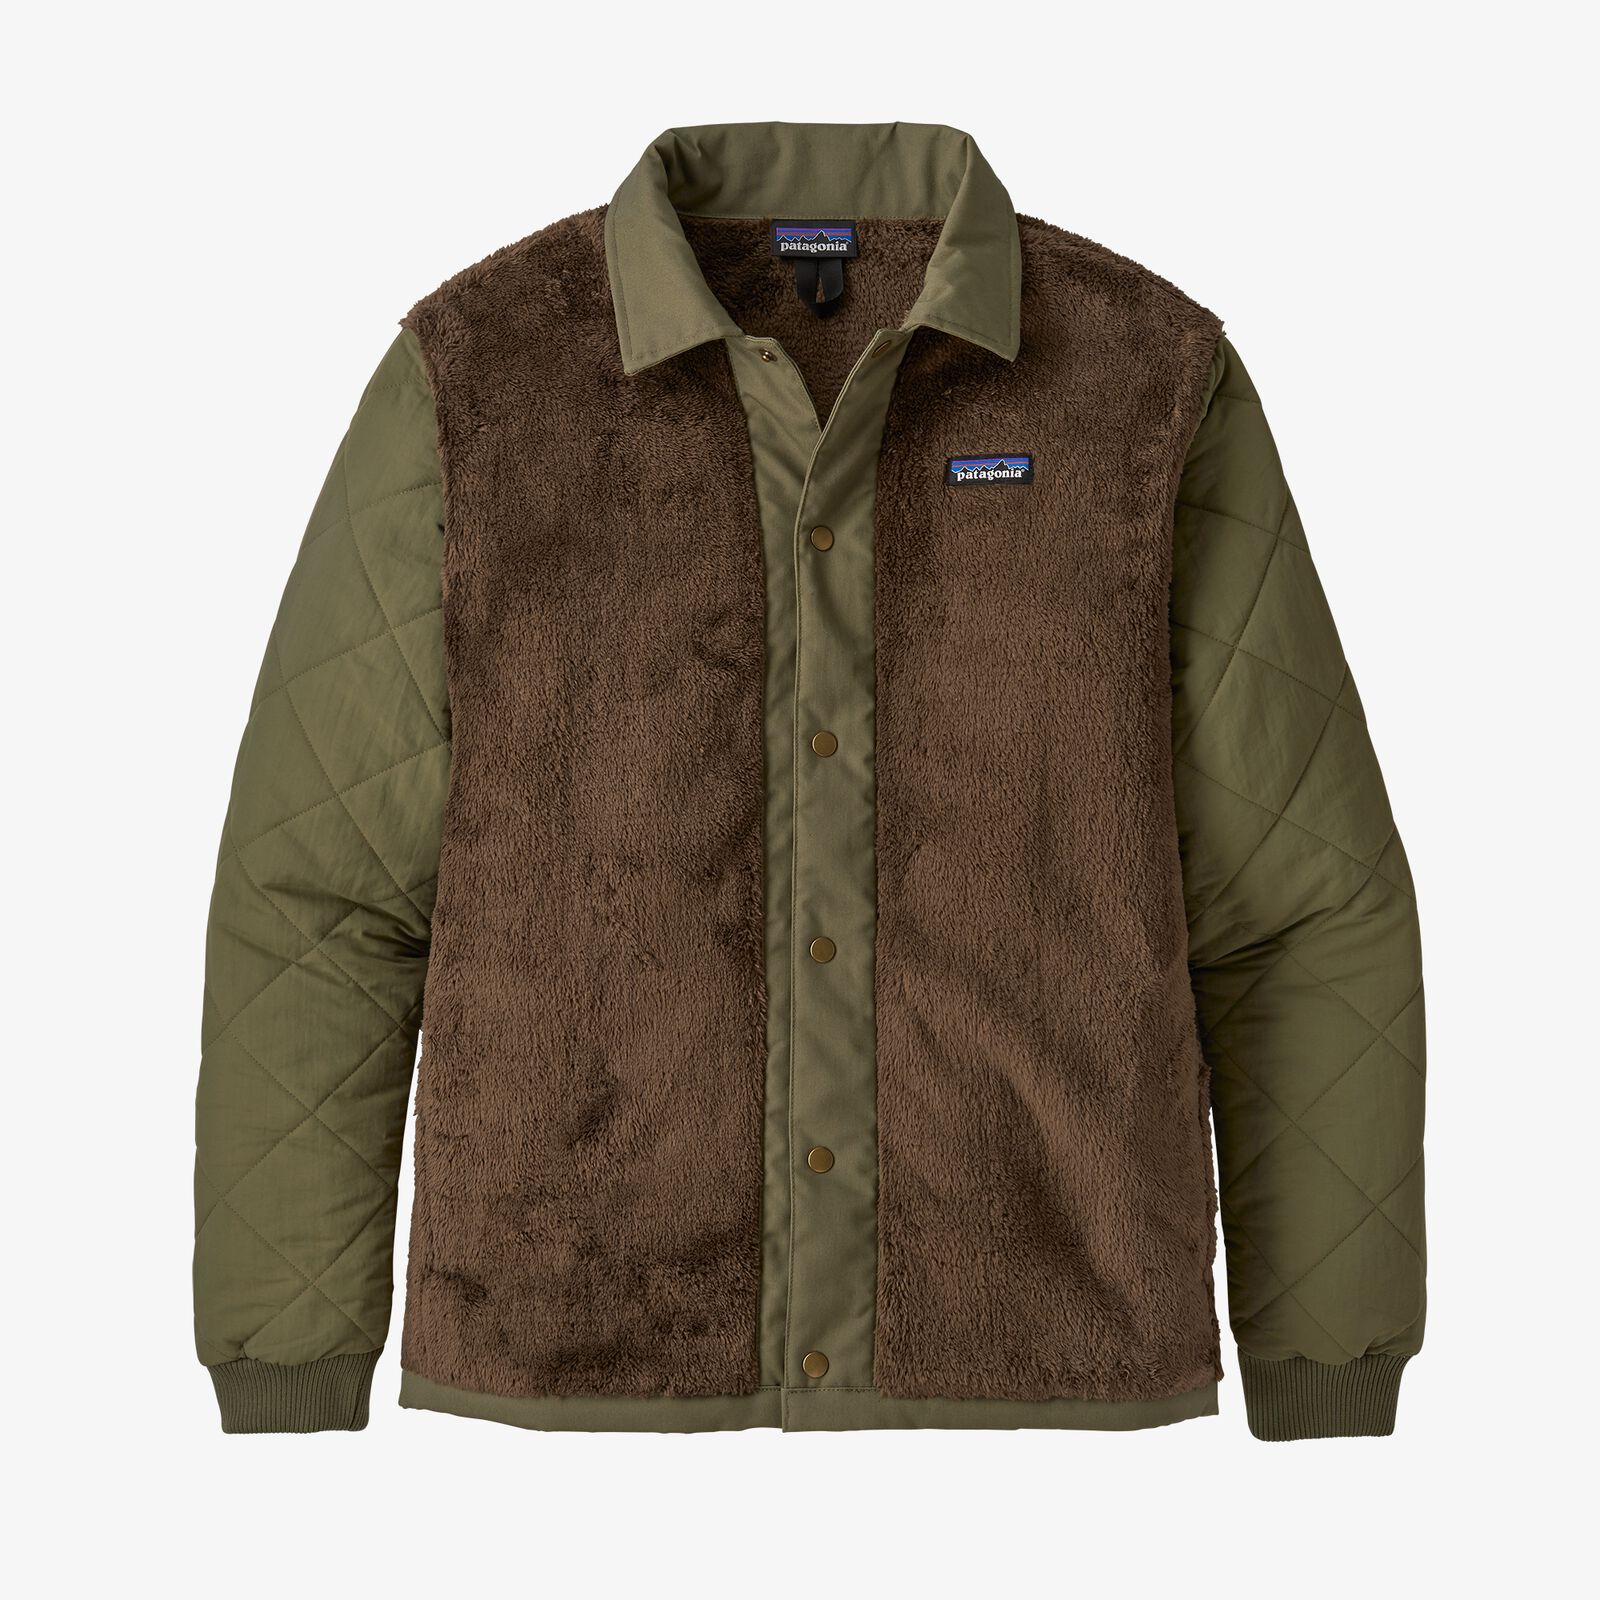 Patagonia Men's Triple Texture Fleece Jacket